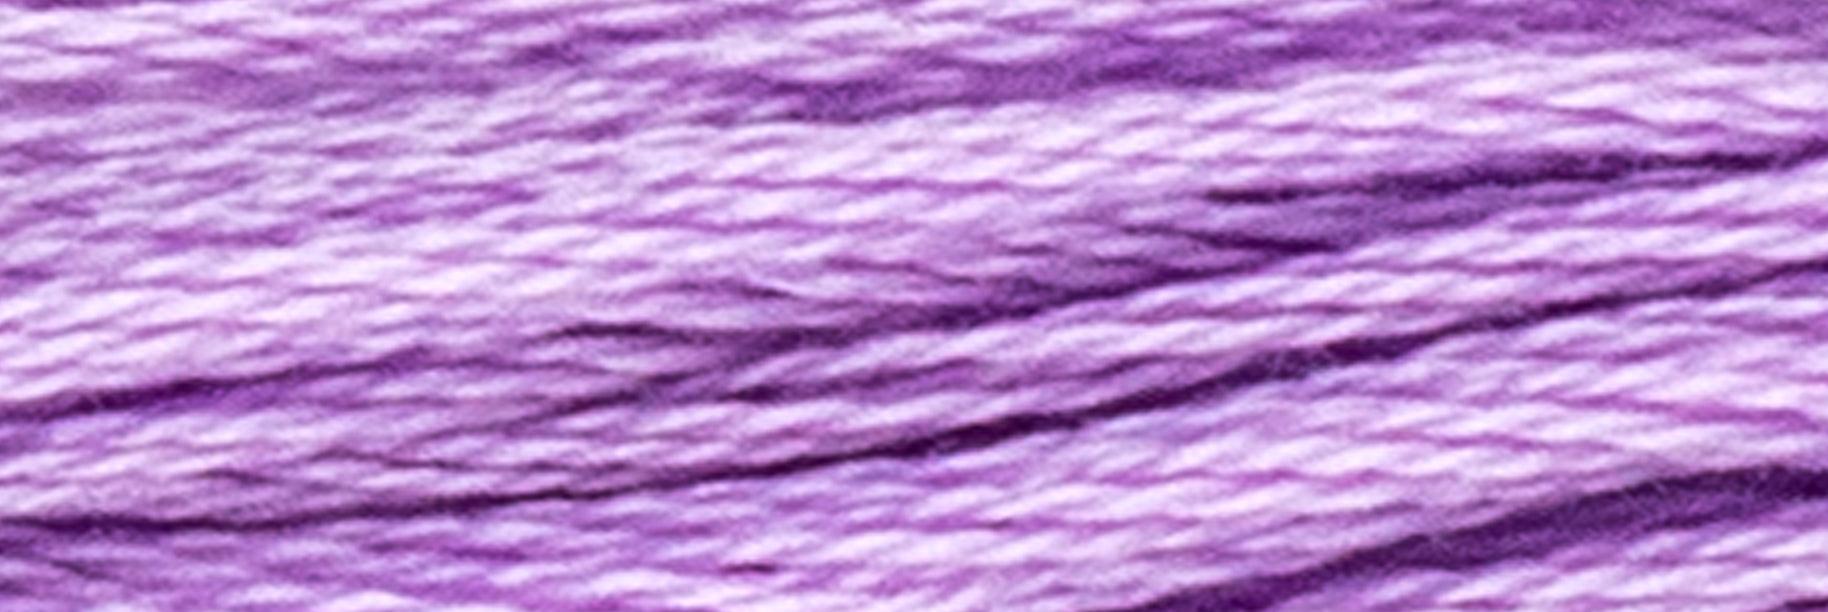 Stranded Cotton Luca-S - 122 / DMC 210 / Anchor 108 - Luca-S Stranded Cotton